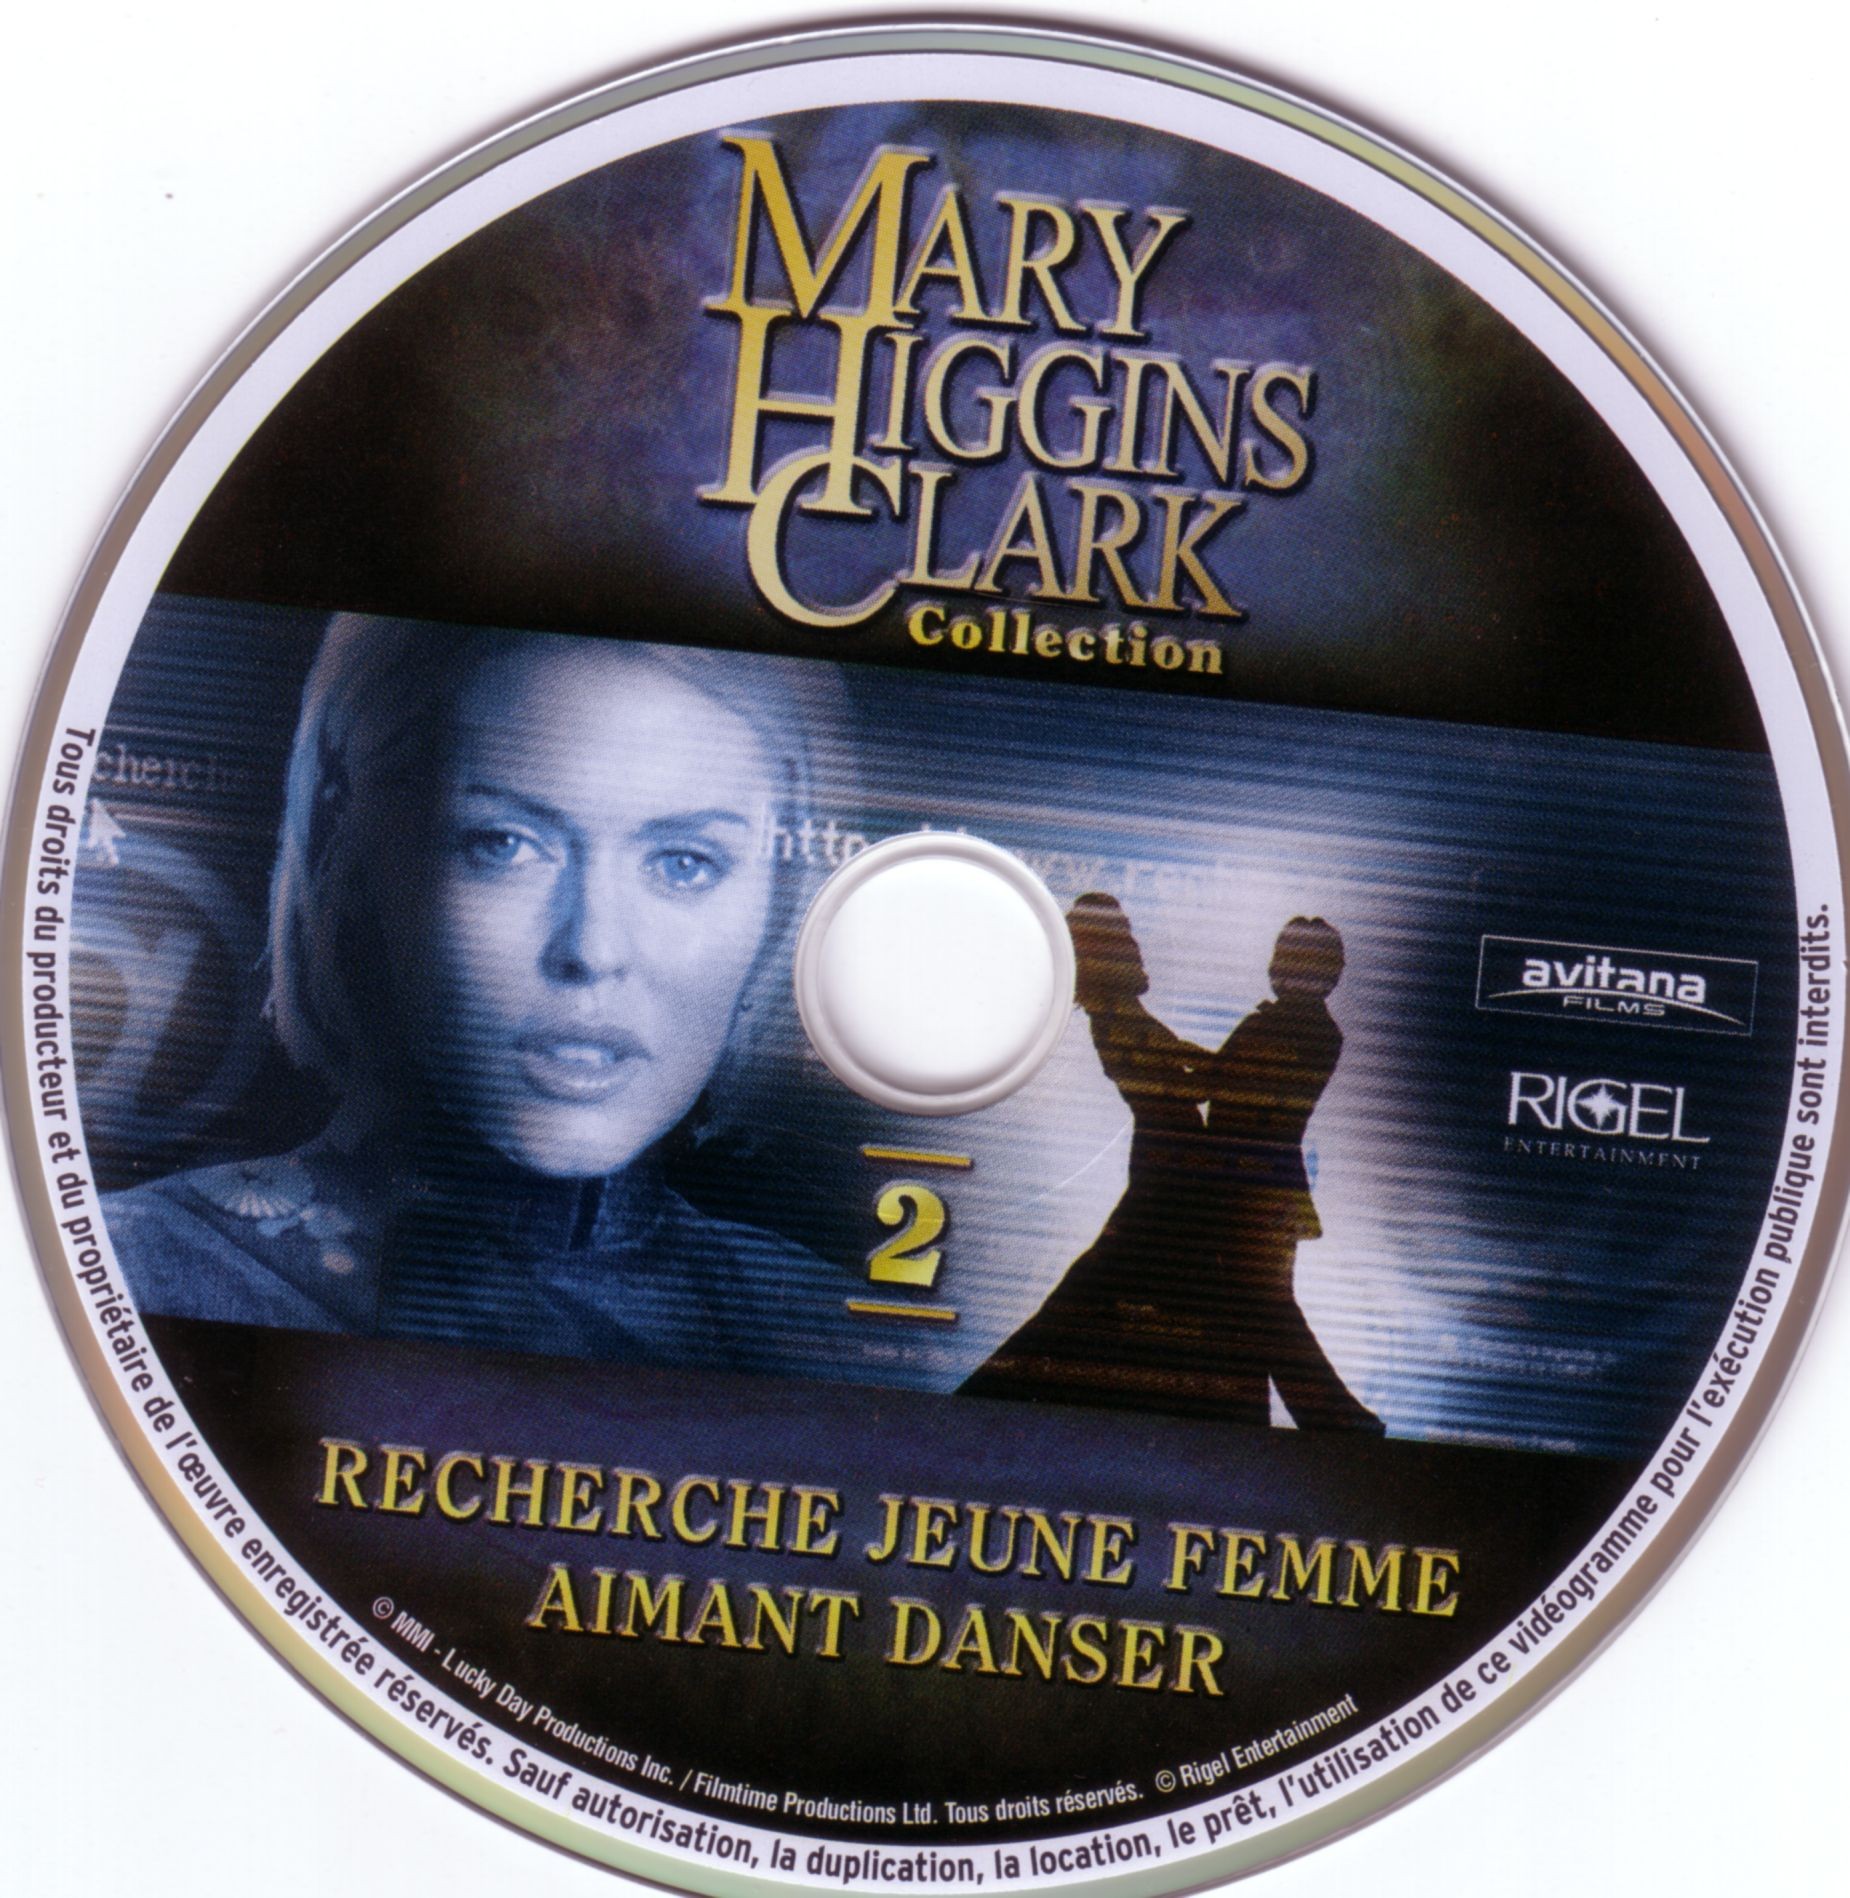 Sticker de Mary Higgins Clark vol 02 - recherche jeune femme @imant danser - Cinéma ...1850 x 1898